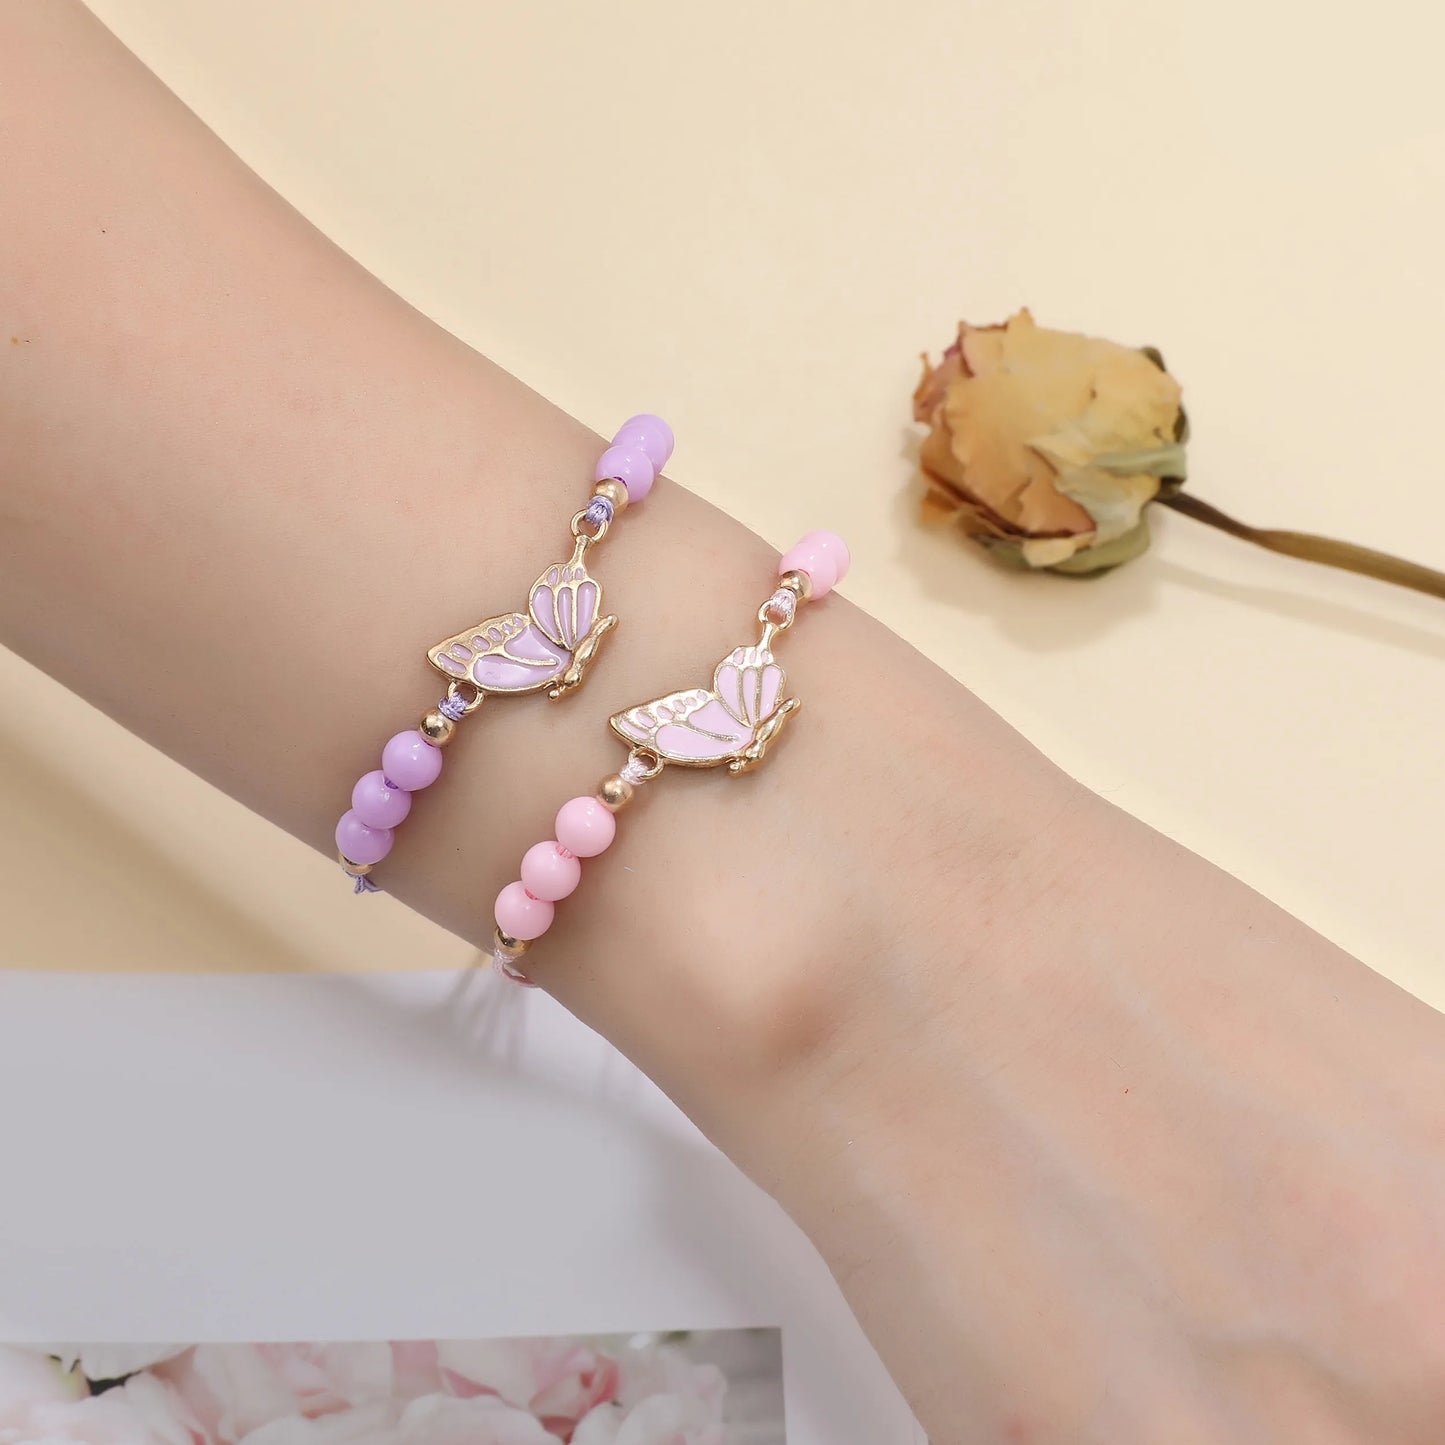 12pcs Color Painted Oil Butterfly Pendant Friendship Woven Bracelet for Women Men Adjustable Hand Woven Couple Jewelry